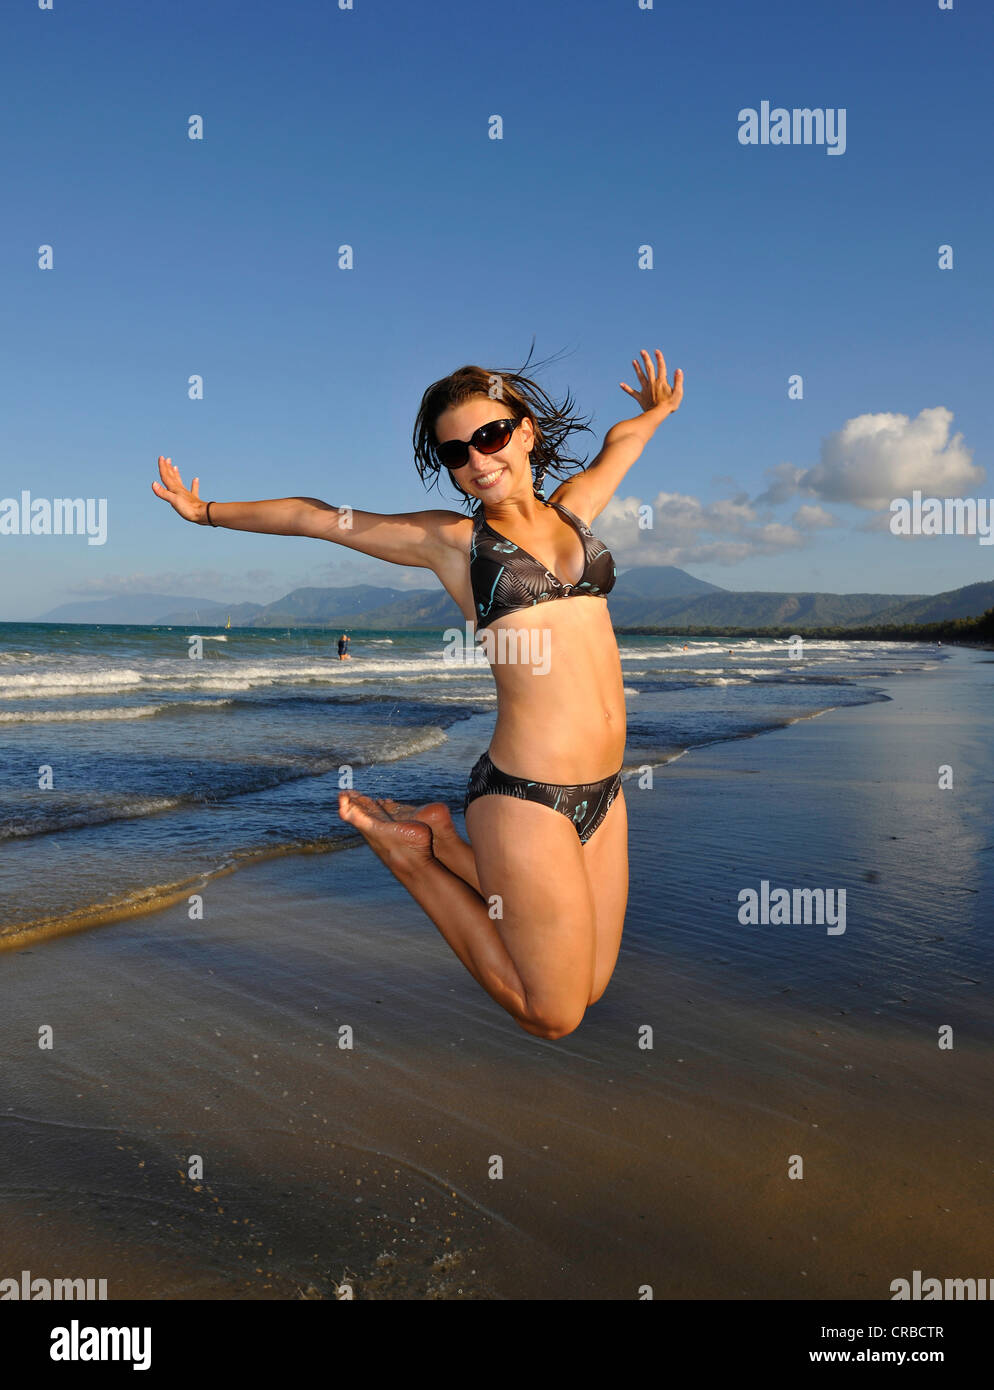 Bikinis hembras fotografías e imágenes de alta resolución - Página 7 - Alamy